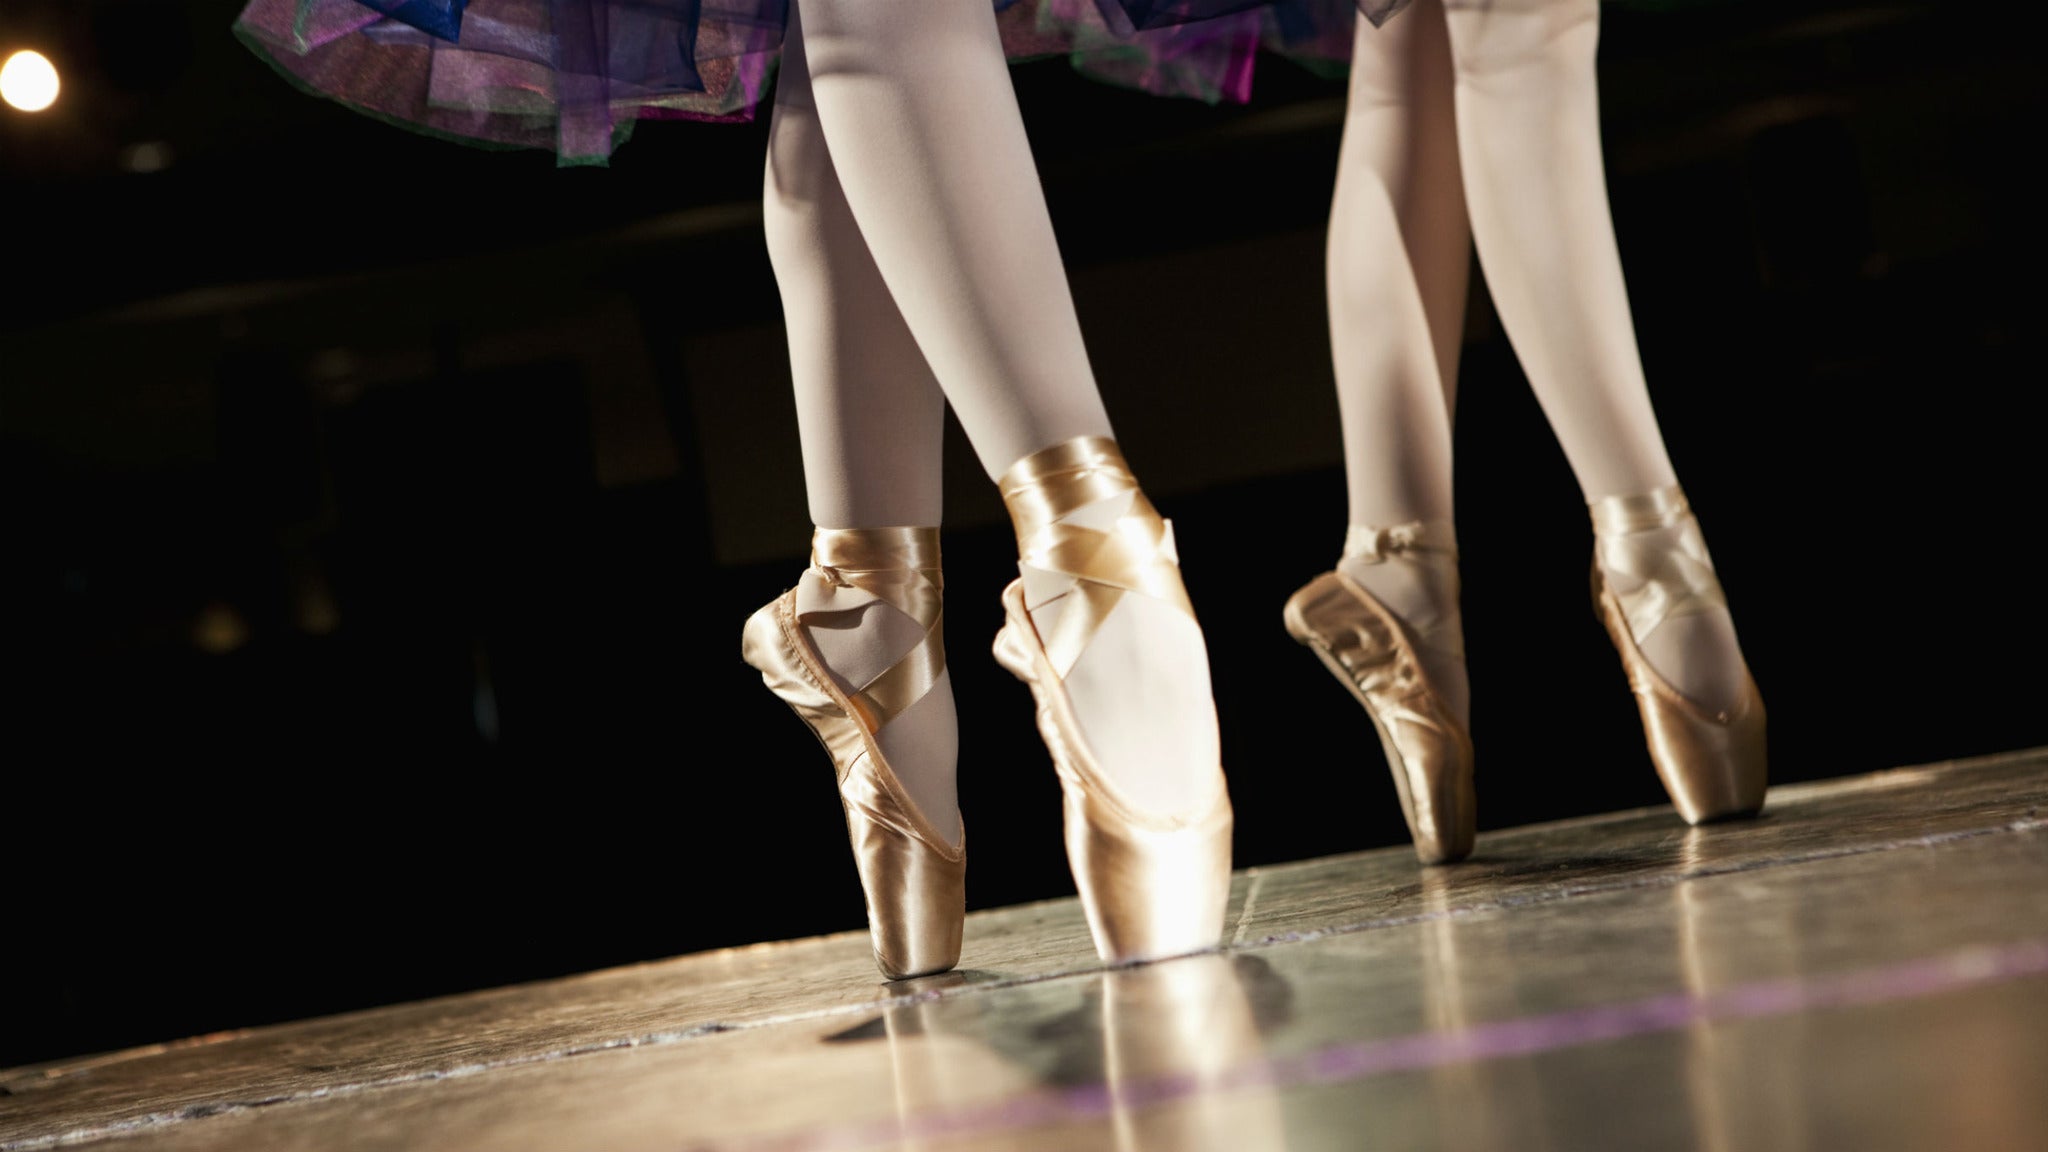 Russian National Ballet Cinderella presale information on freepresalepasswords.com